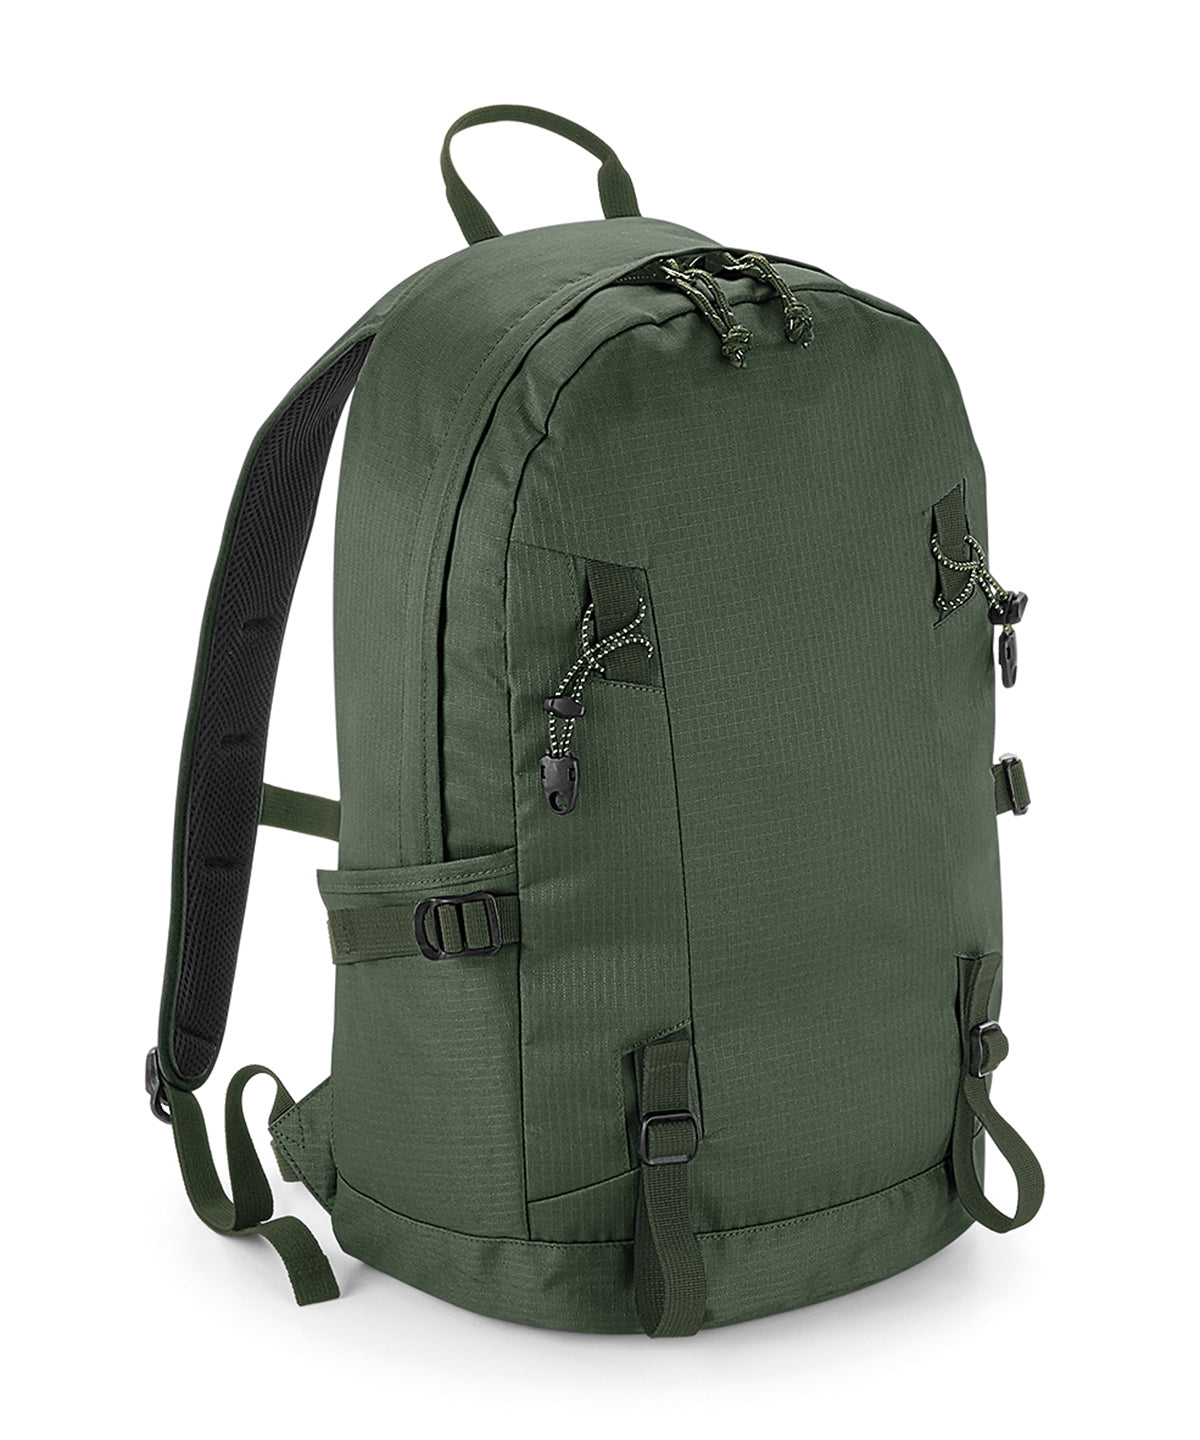 Töskur - Everyday Outdoor 20 Litre Backpack